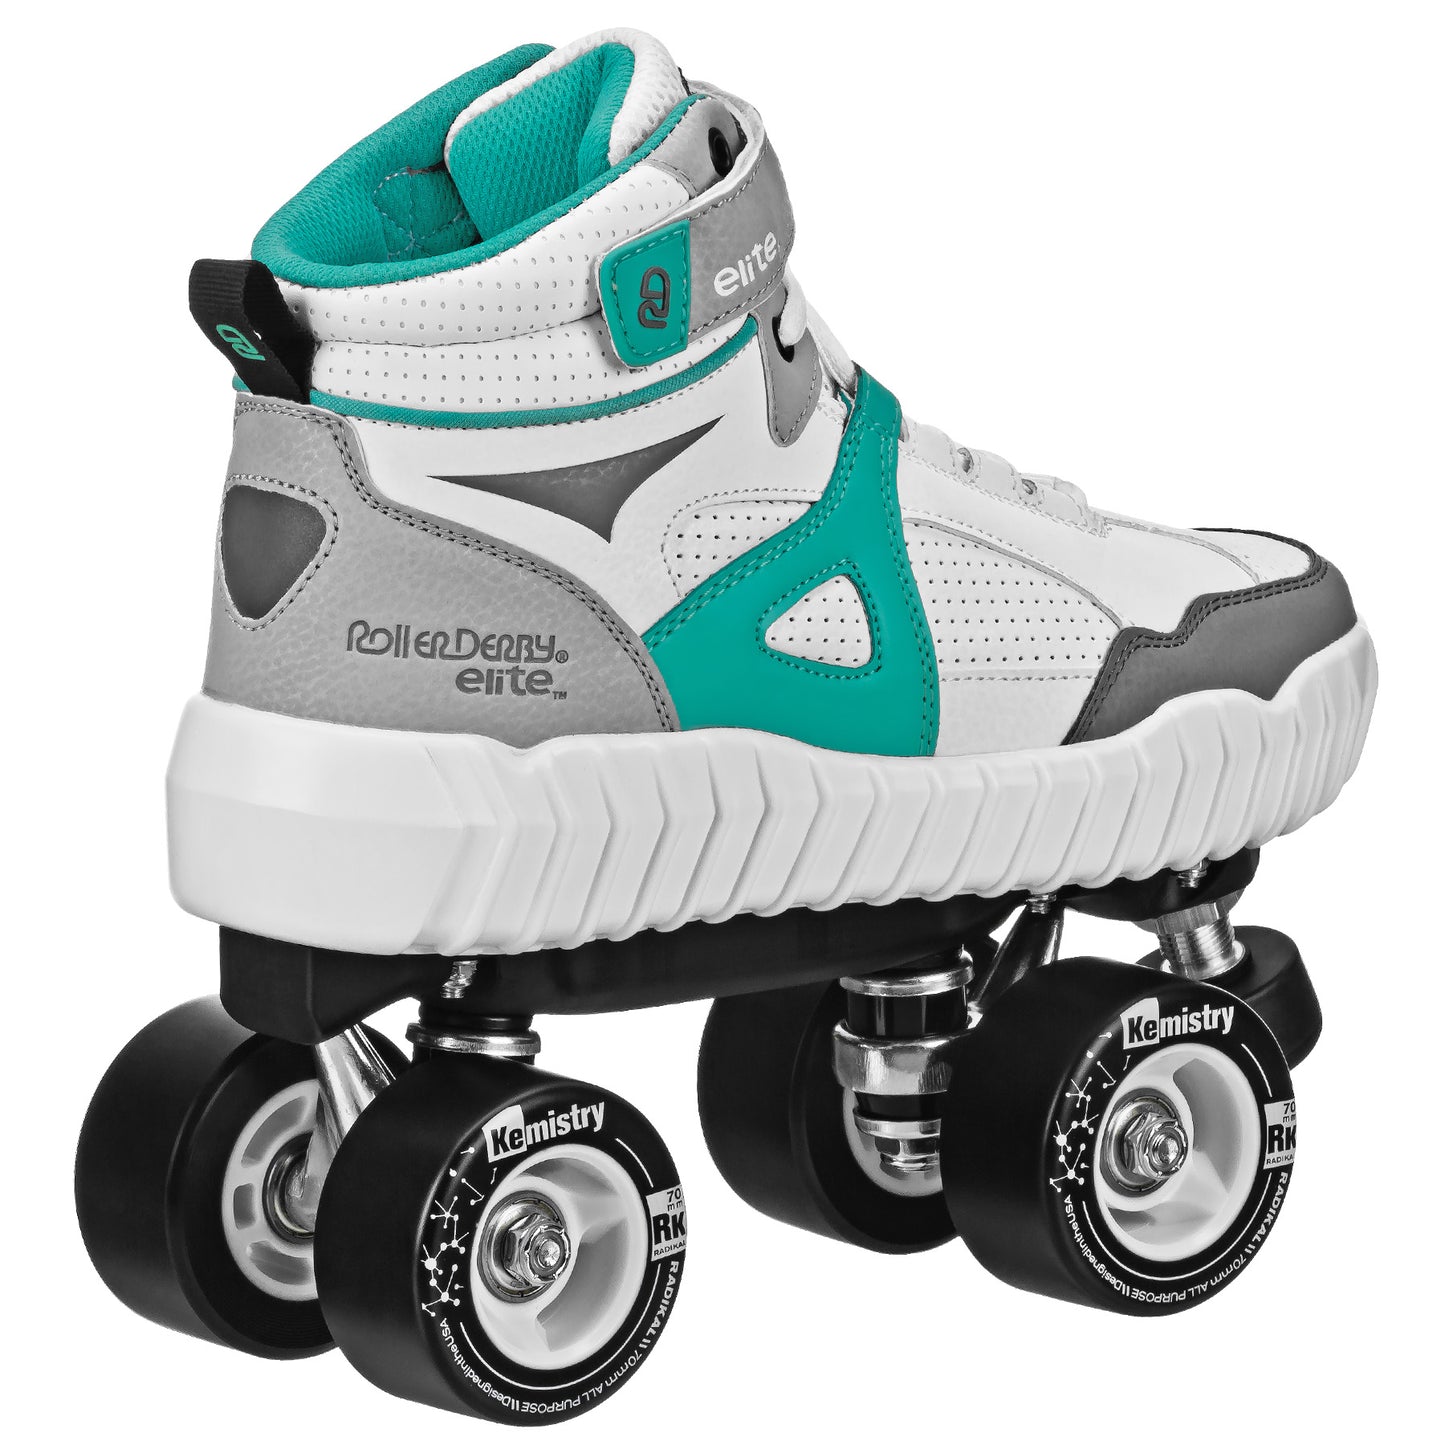 Glidr Sneaker Roller Skates